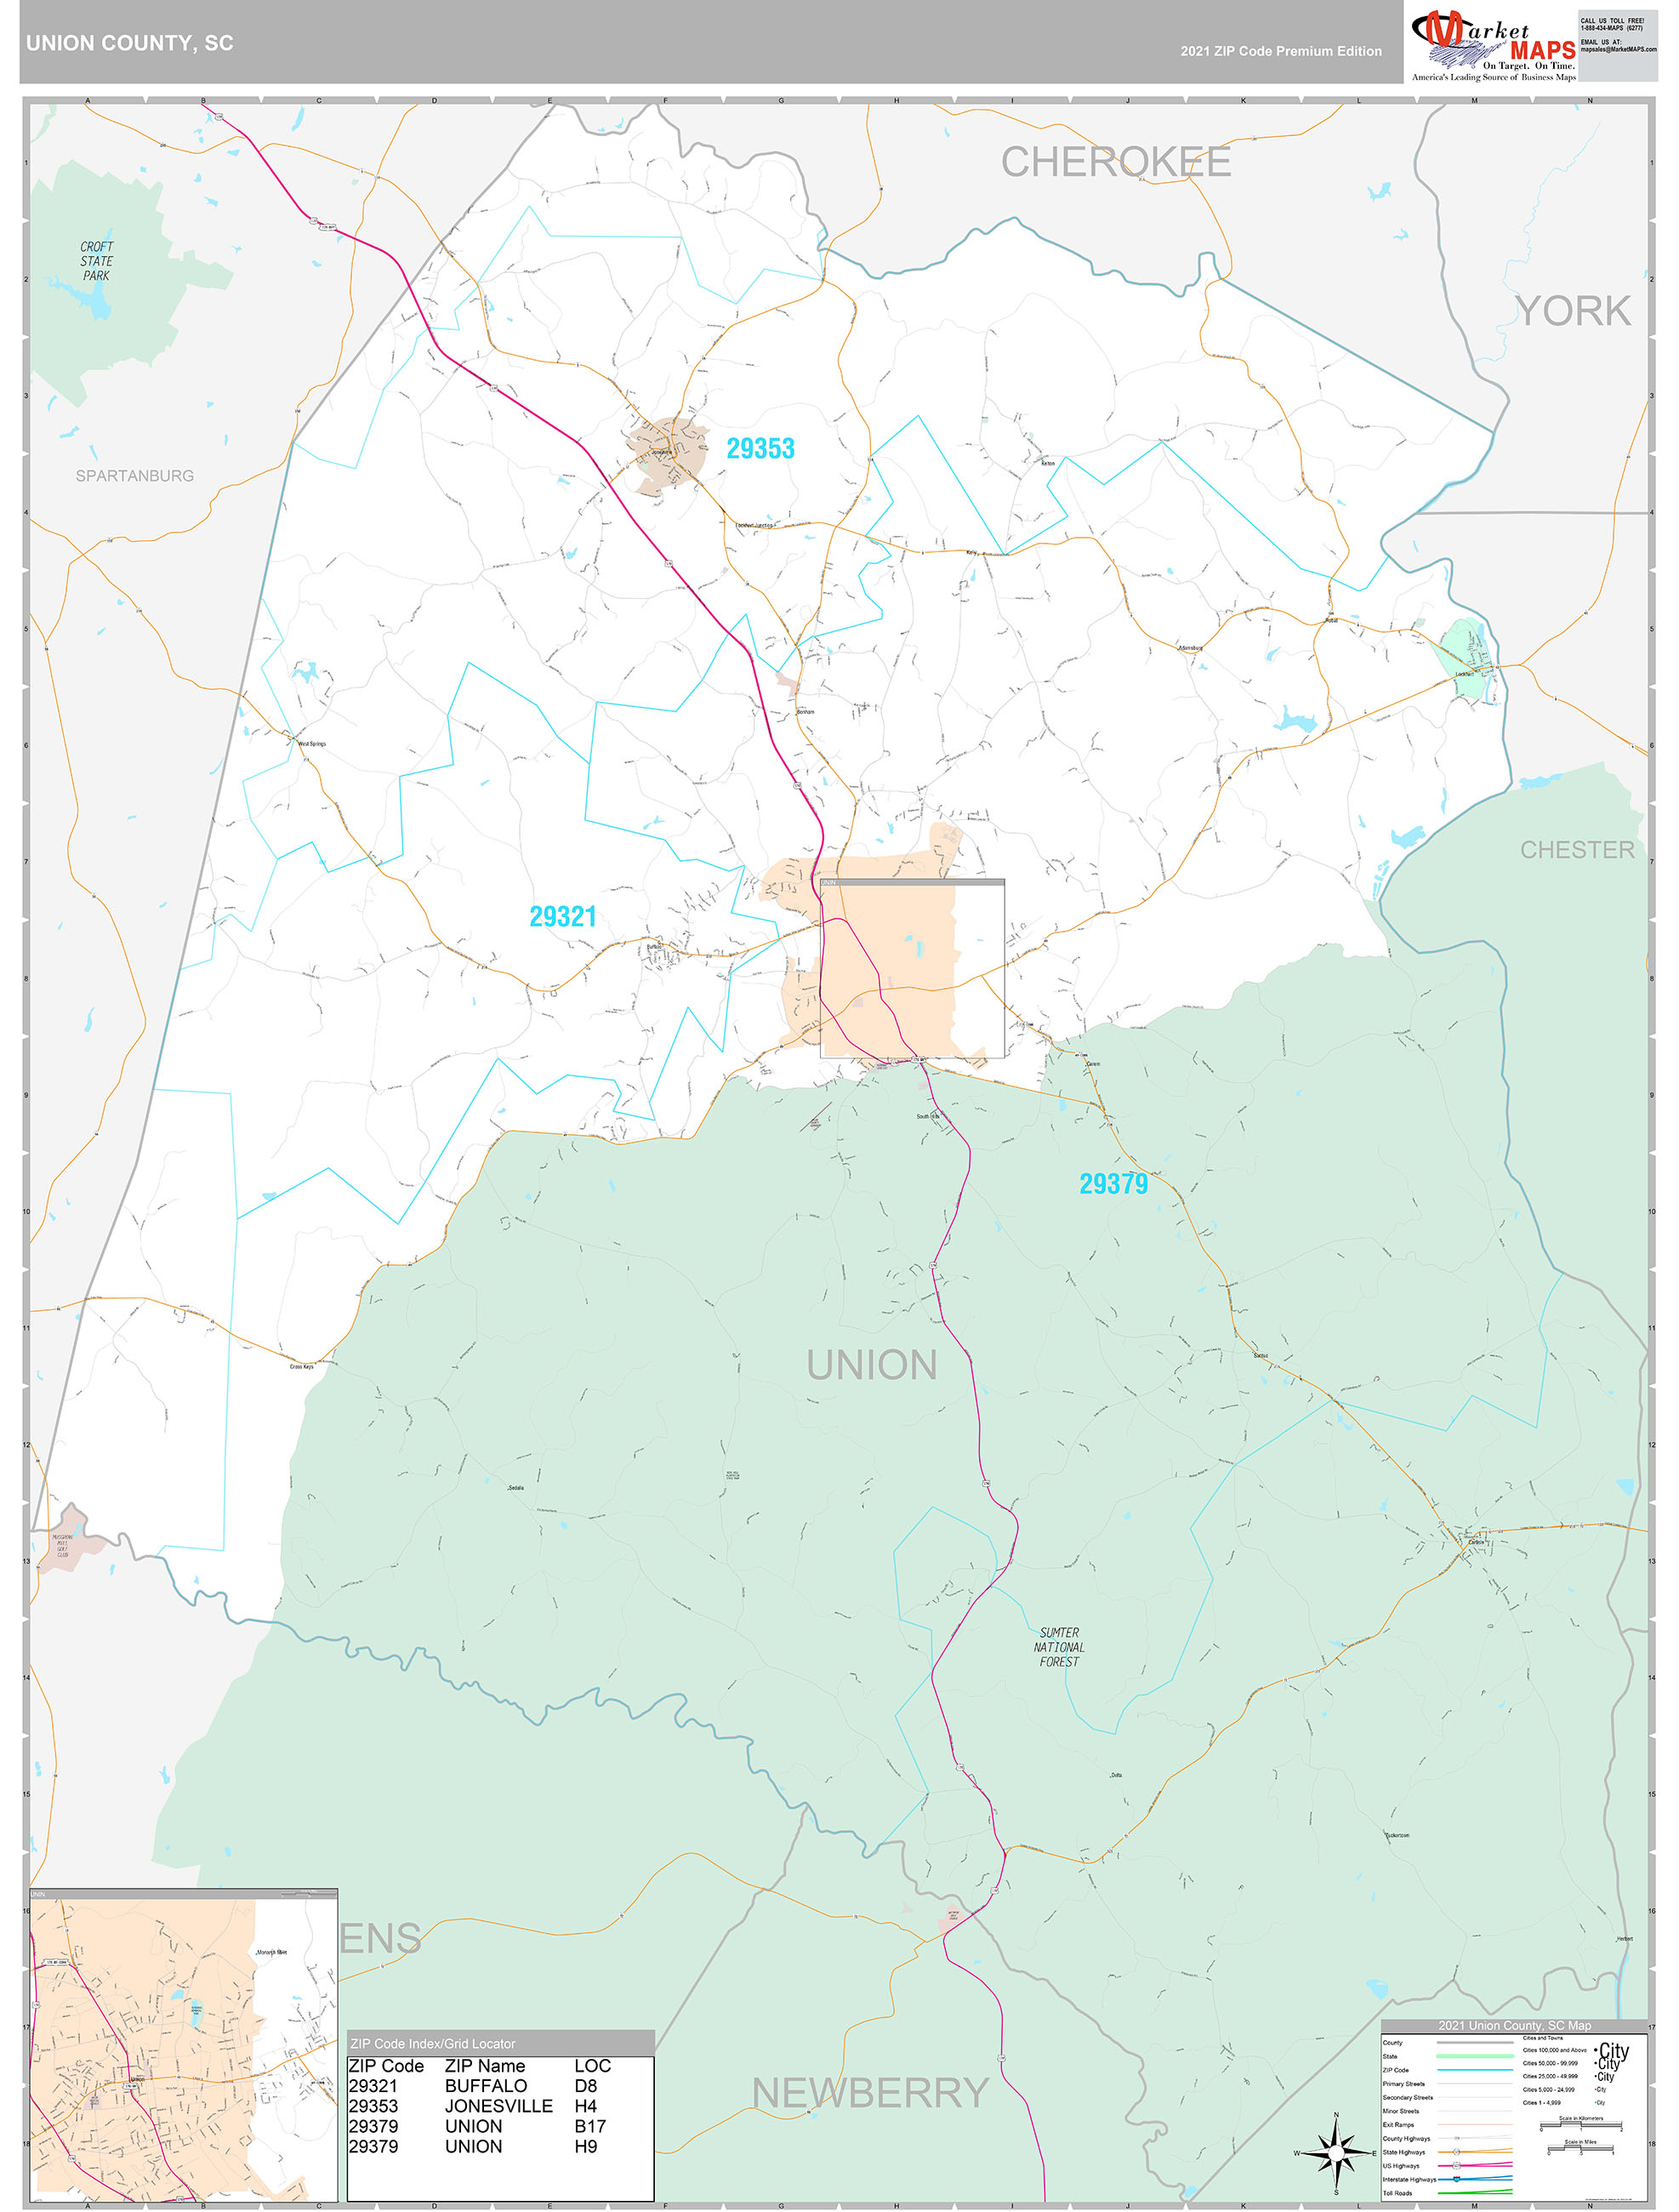 Union County, SC Wall Map Premium Style by MarketMAPS - MapSales